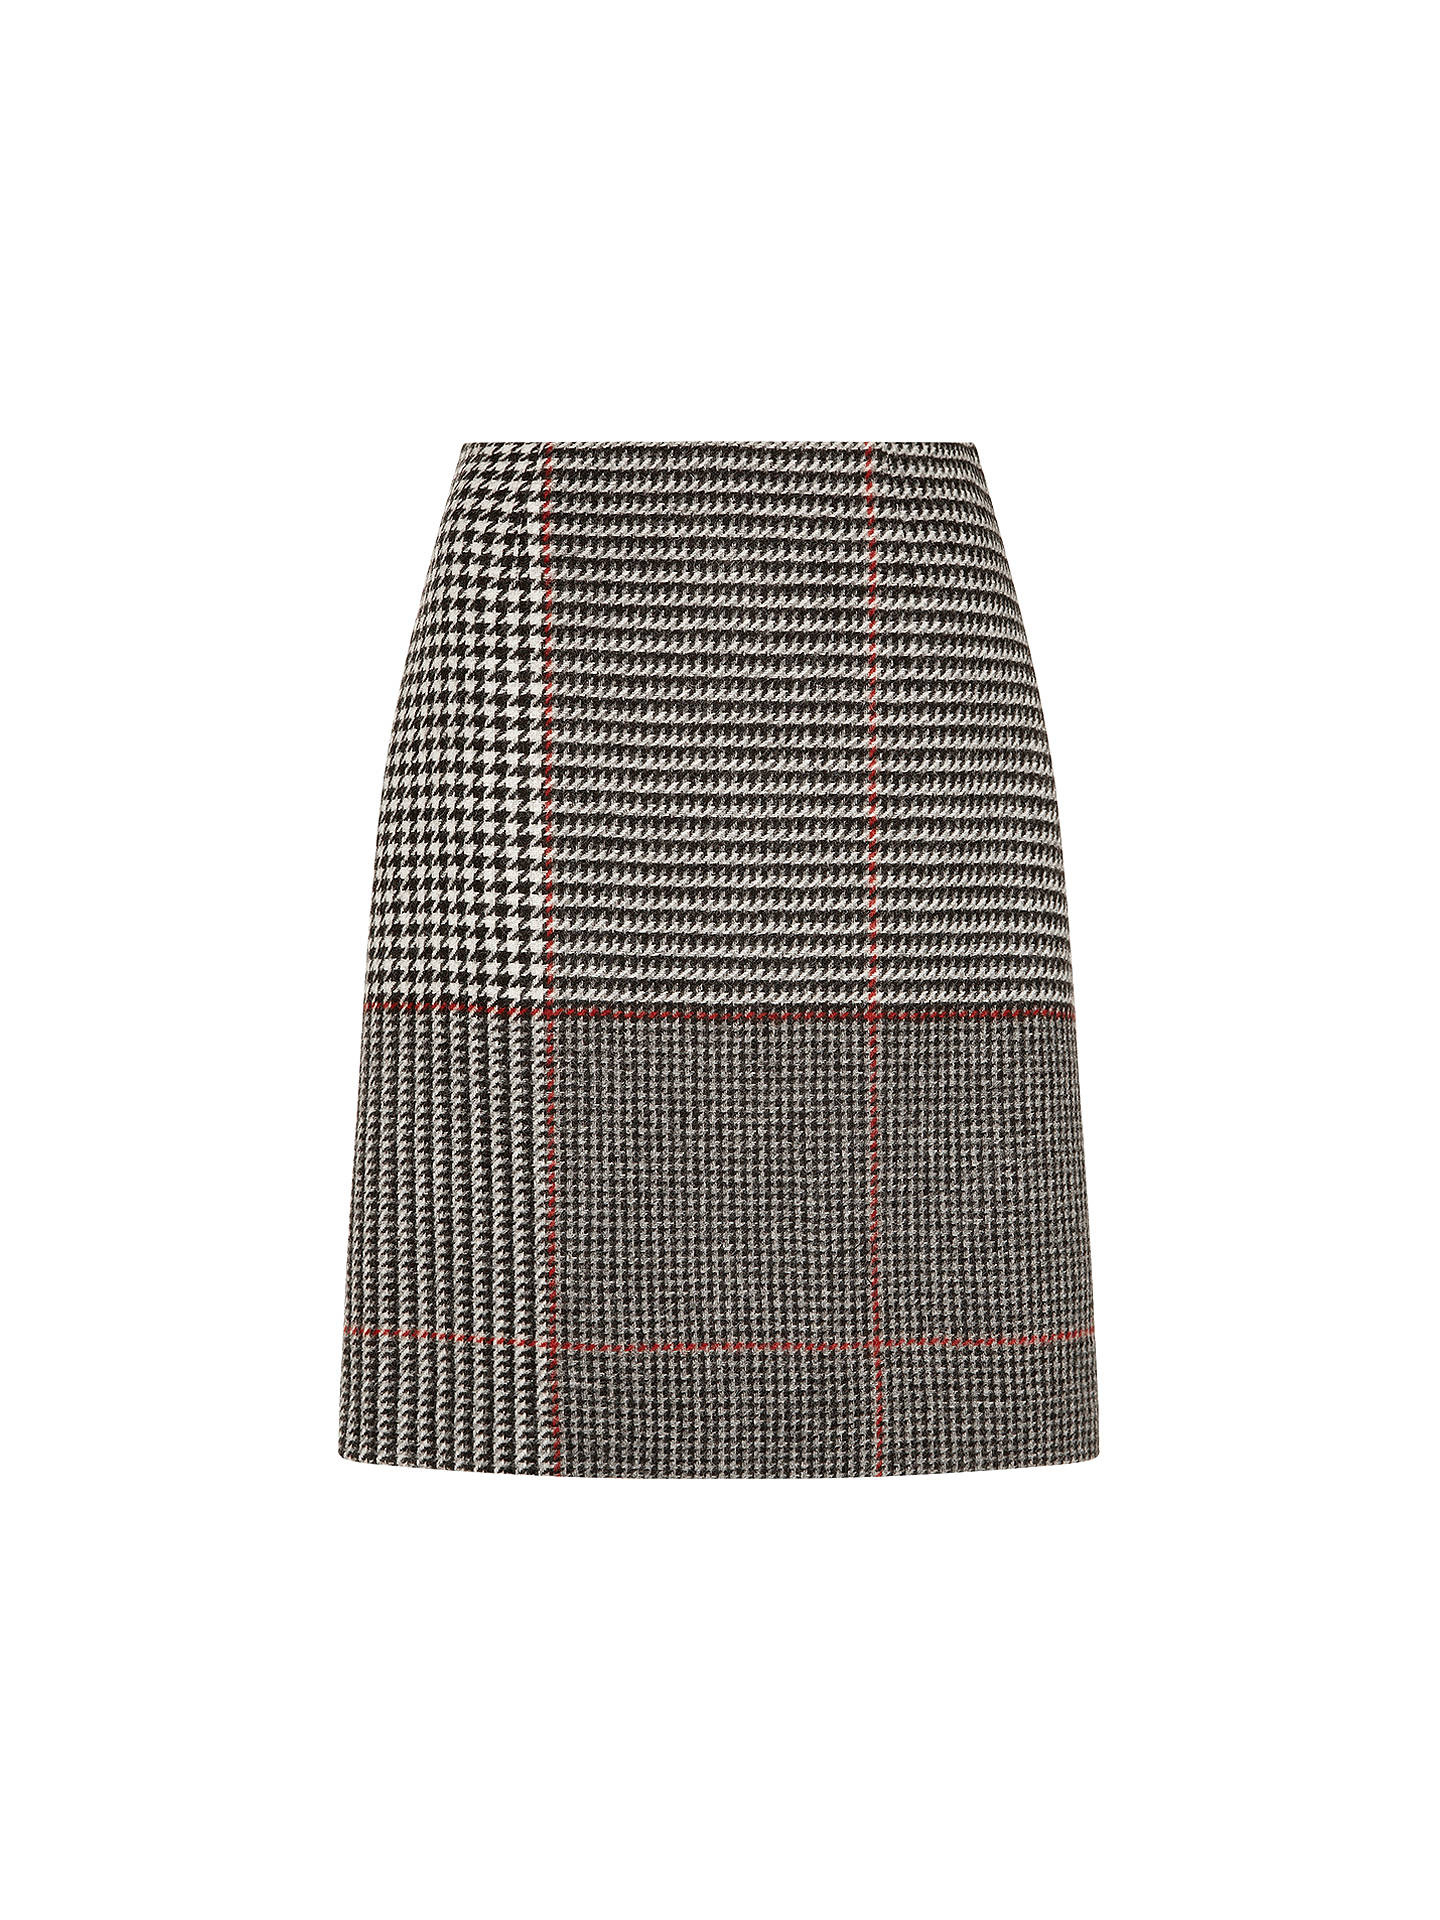 Hobbs London Raven Skirt, Grey Multi at John Lewis & Partners